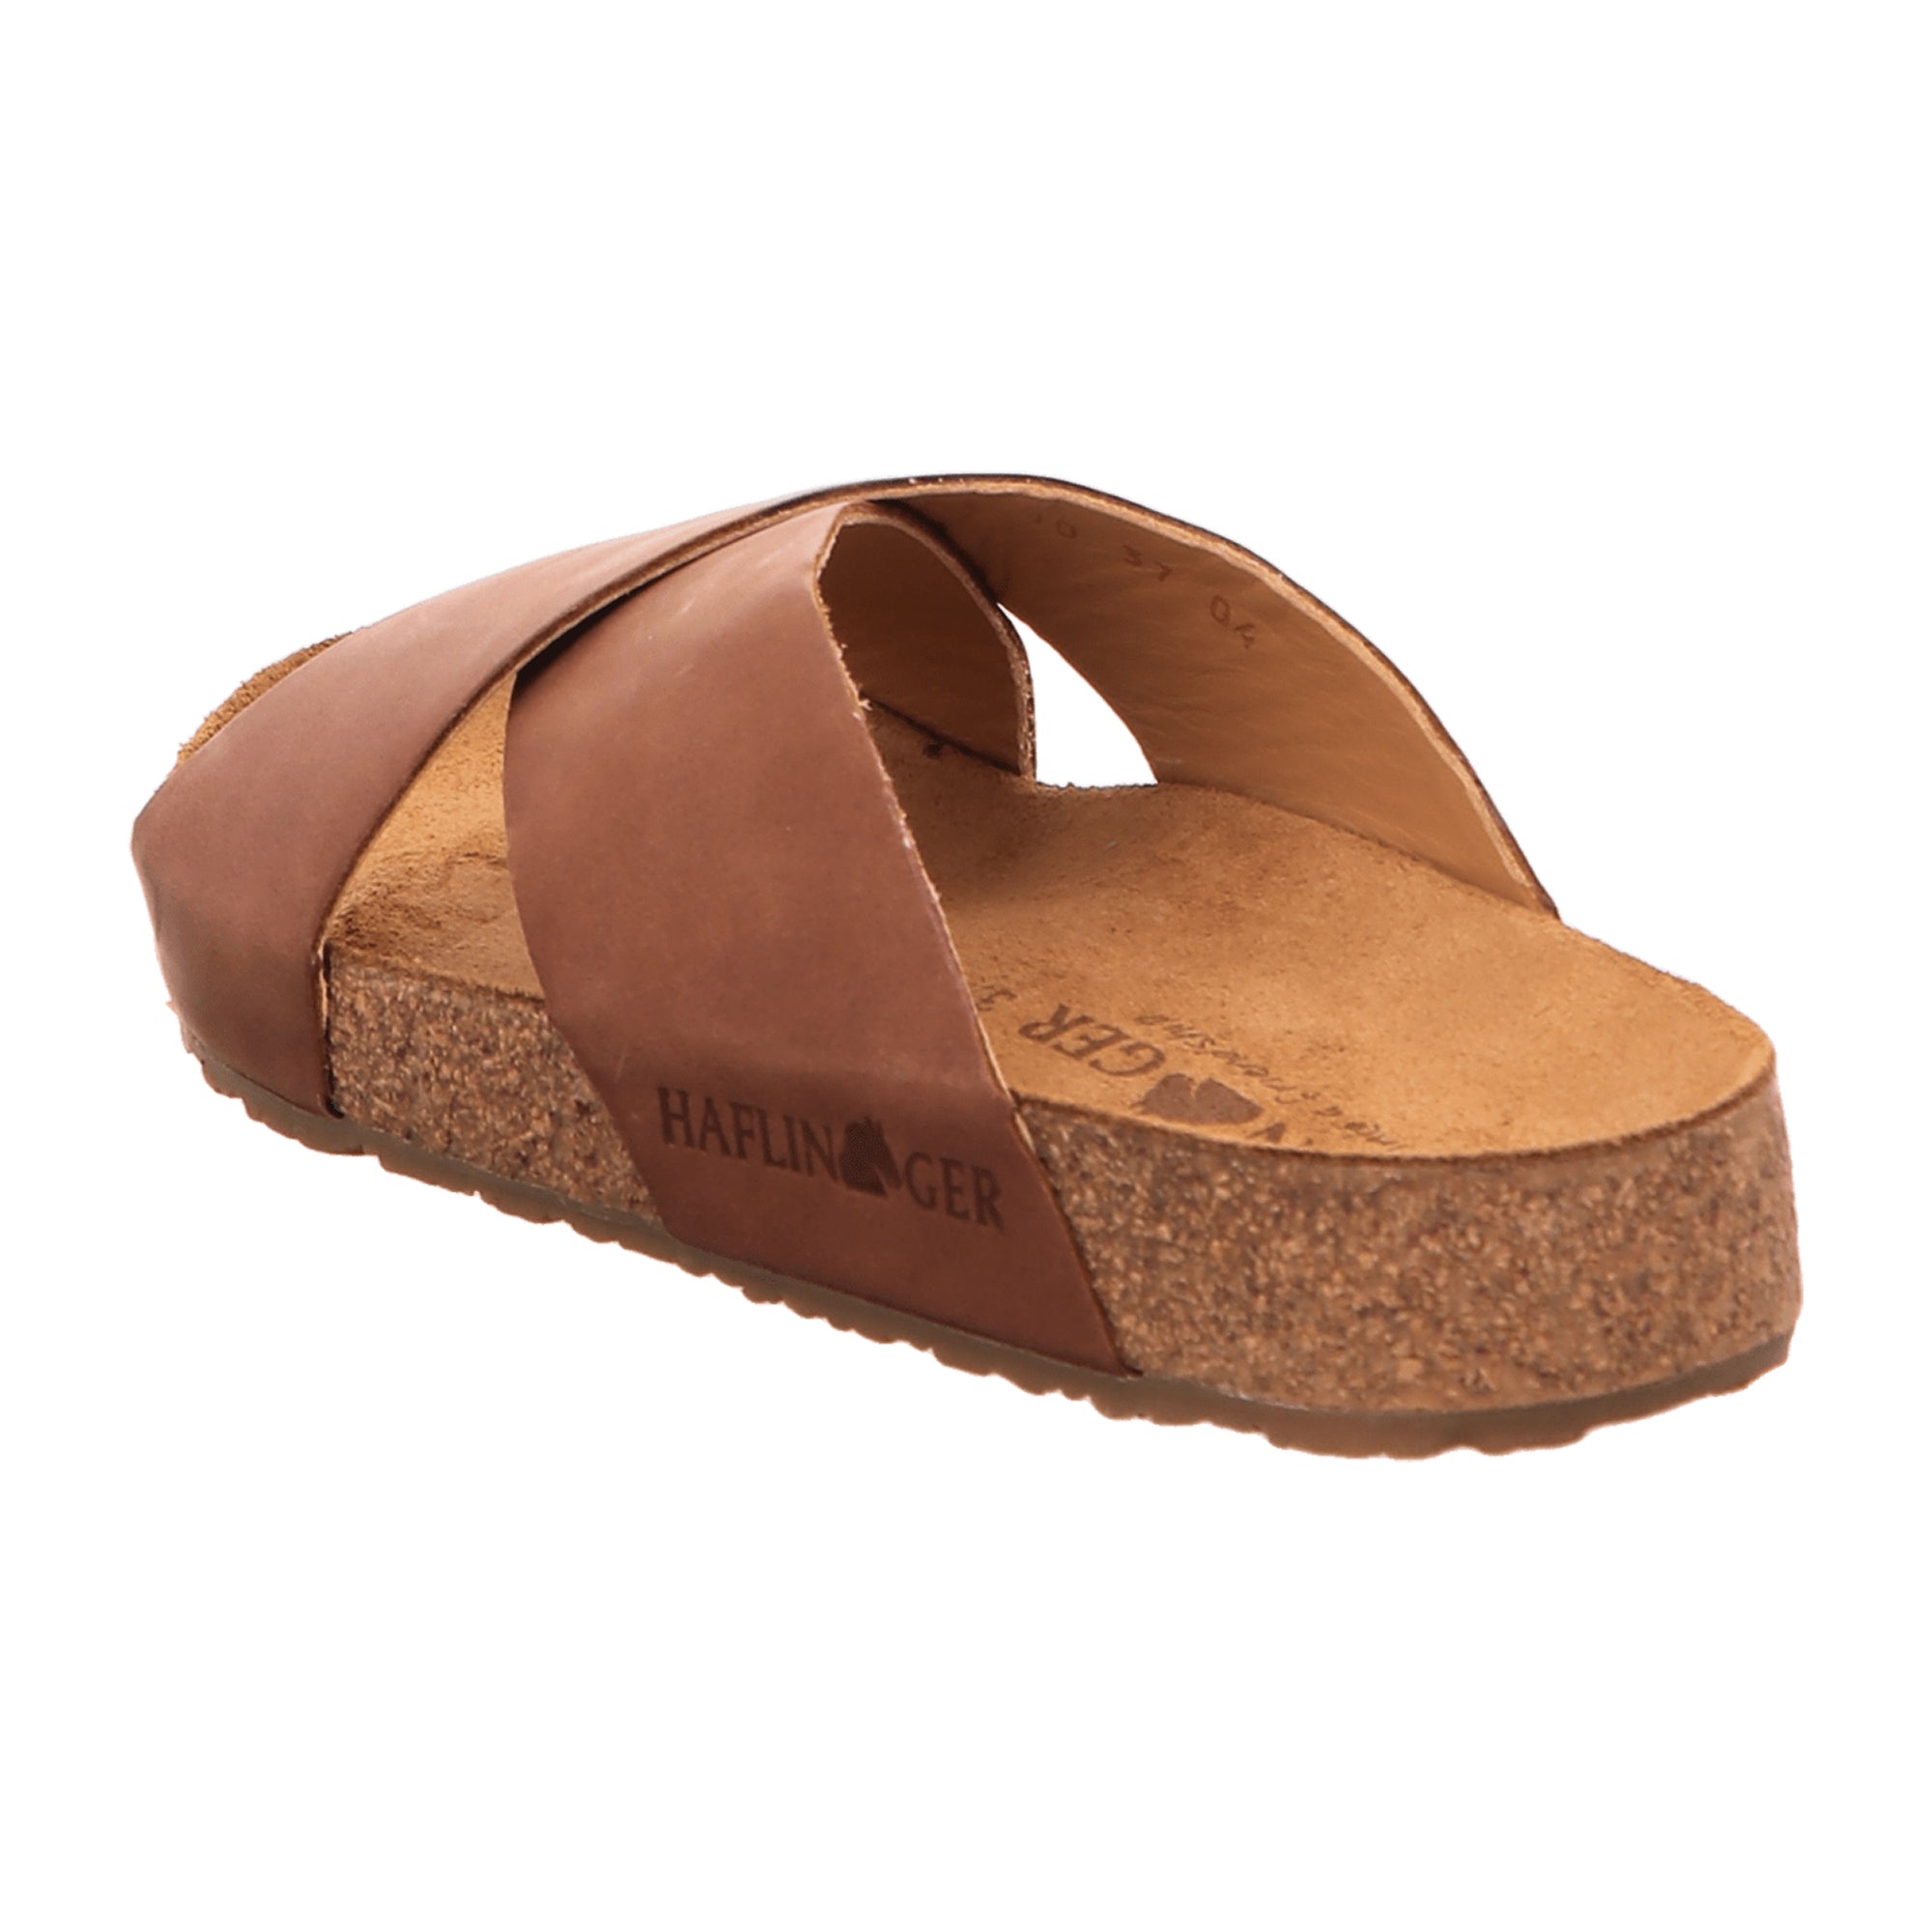 Haflinger Bio Mio Women's Brown Sandals - Eco-Friendly and Stylish